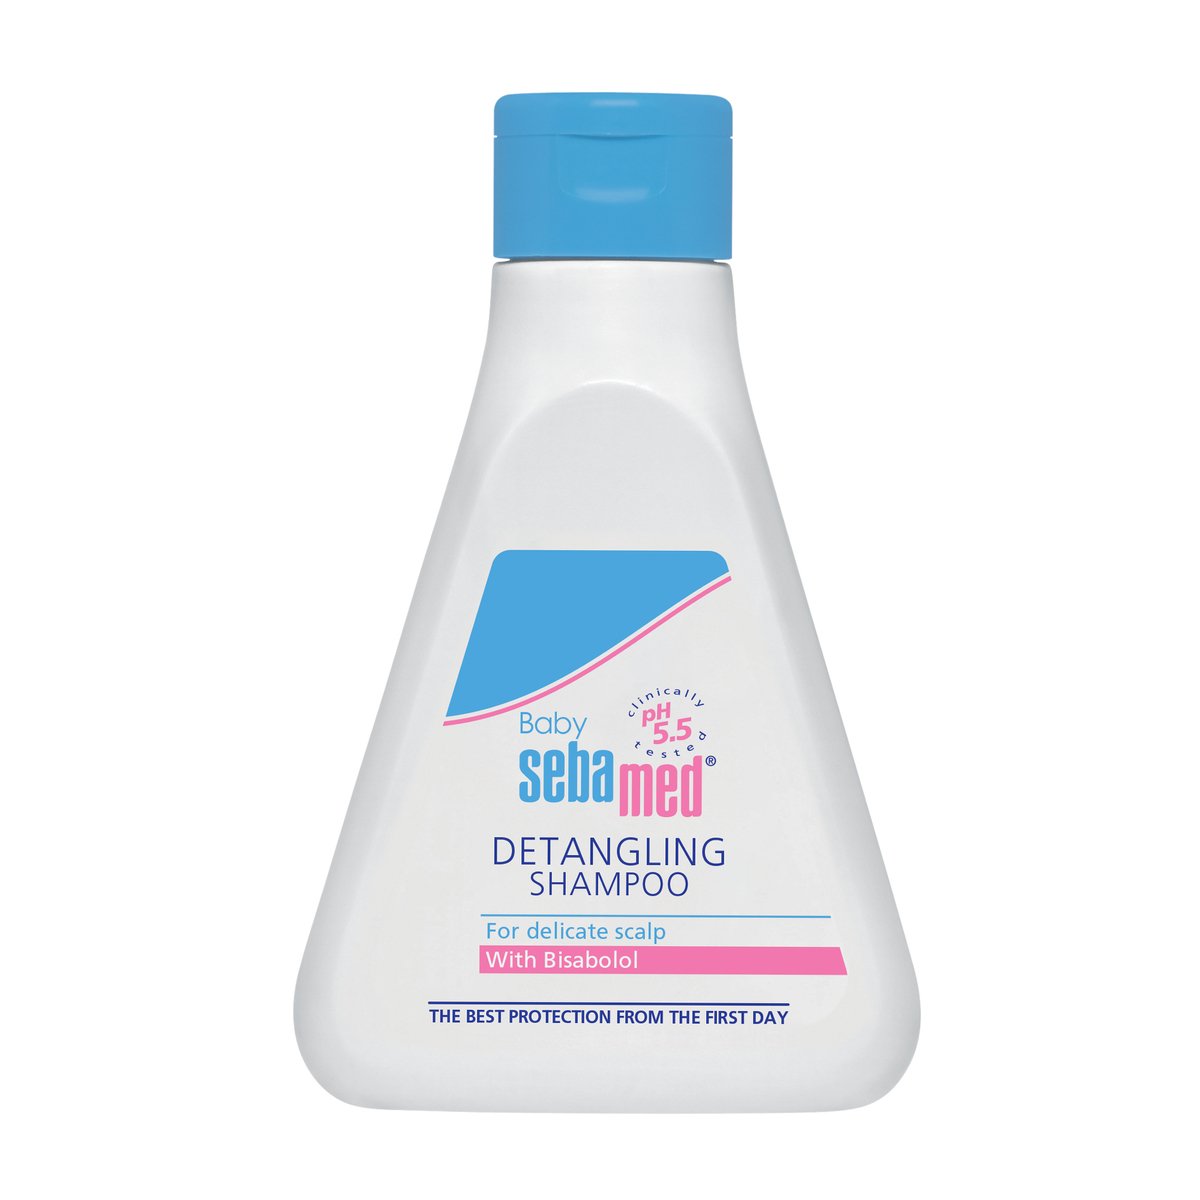 Sebamed Baby Detangling Shampoo With Bisabol 250 ml